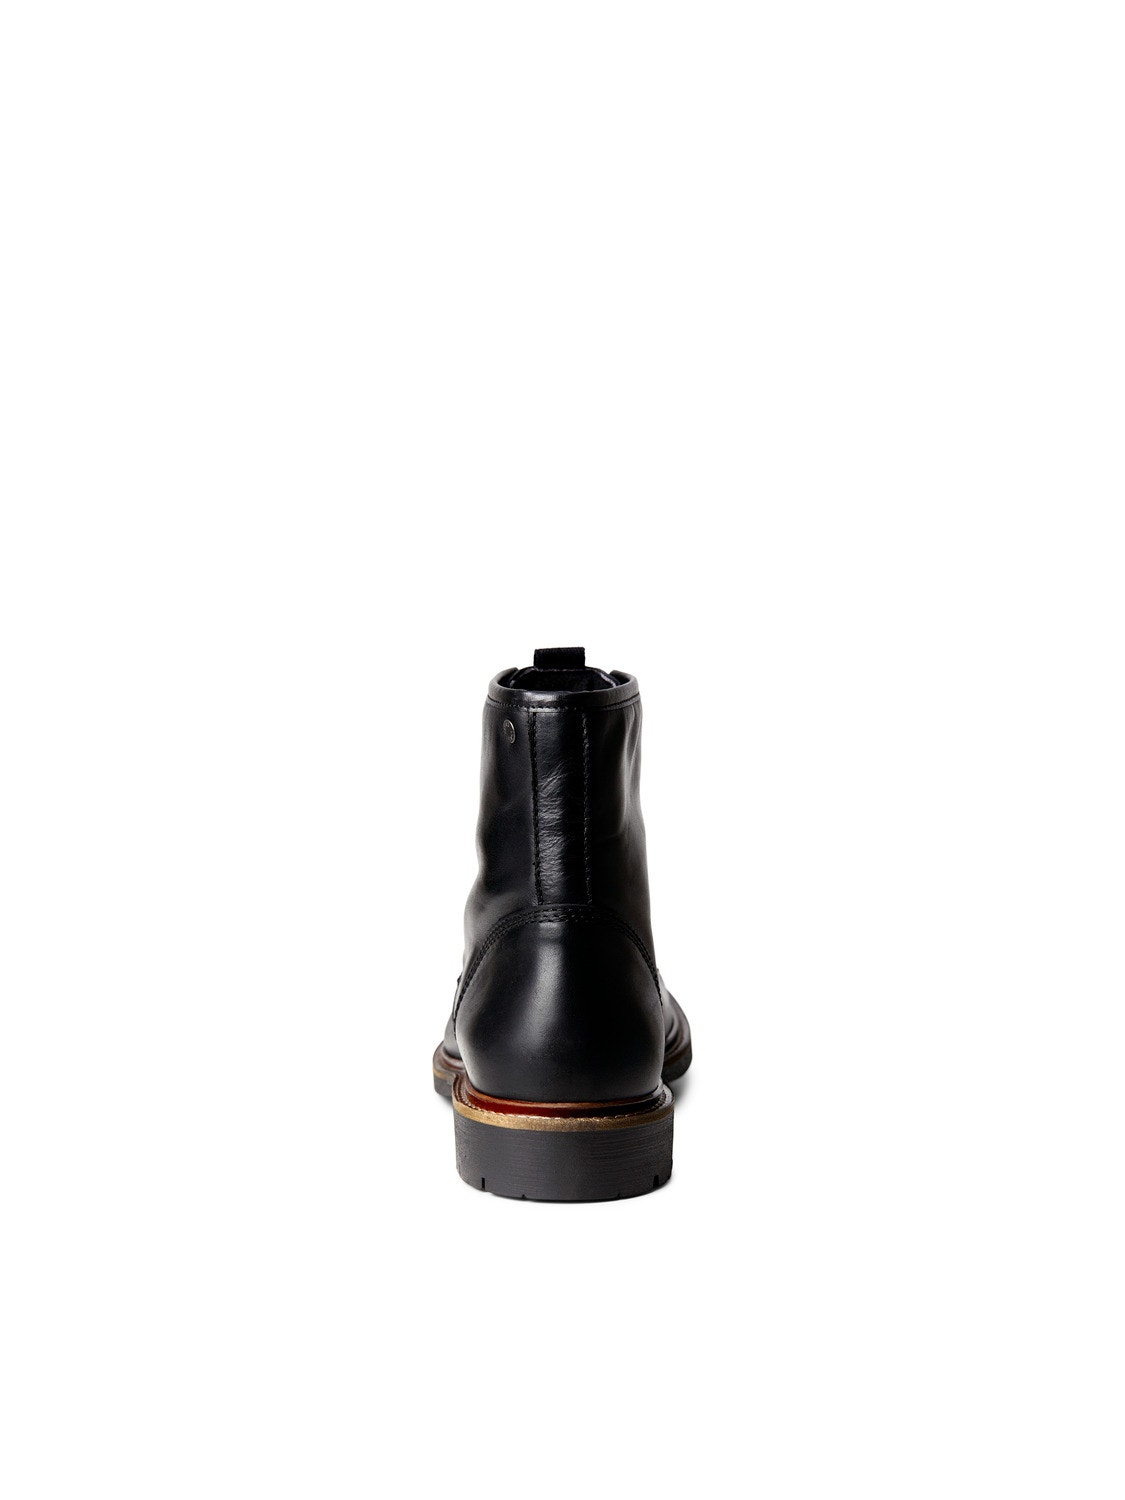 Jack & Jones Boots -Anthracite - 12215613